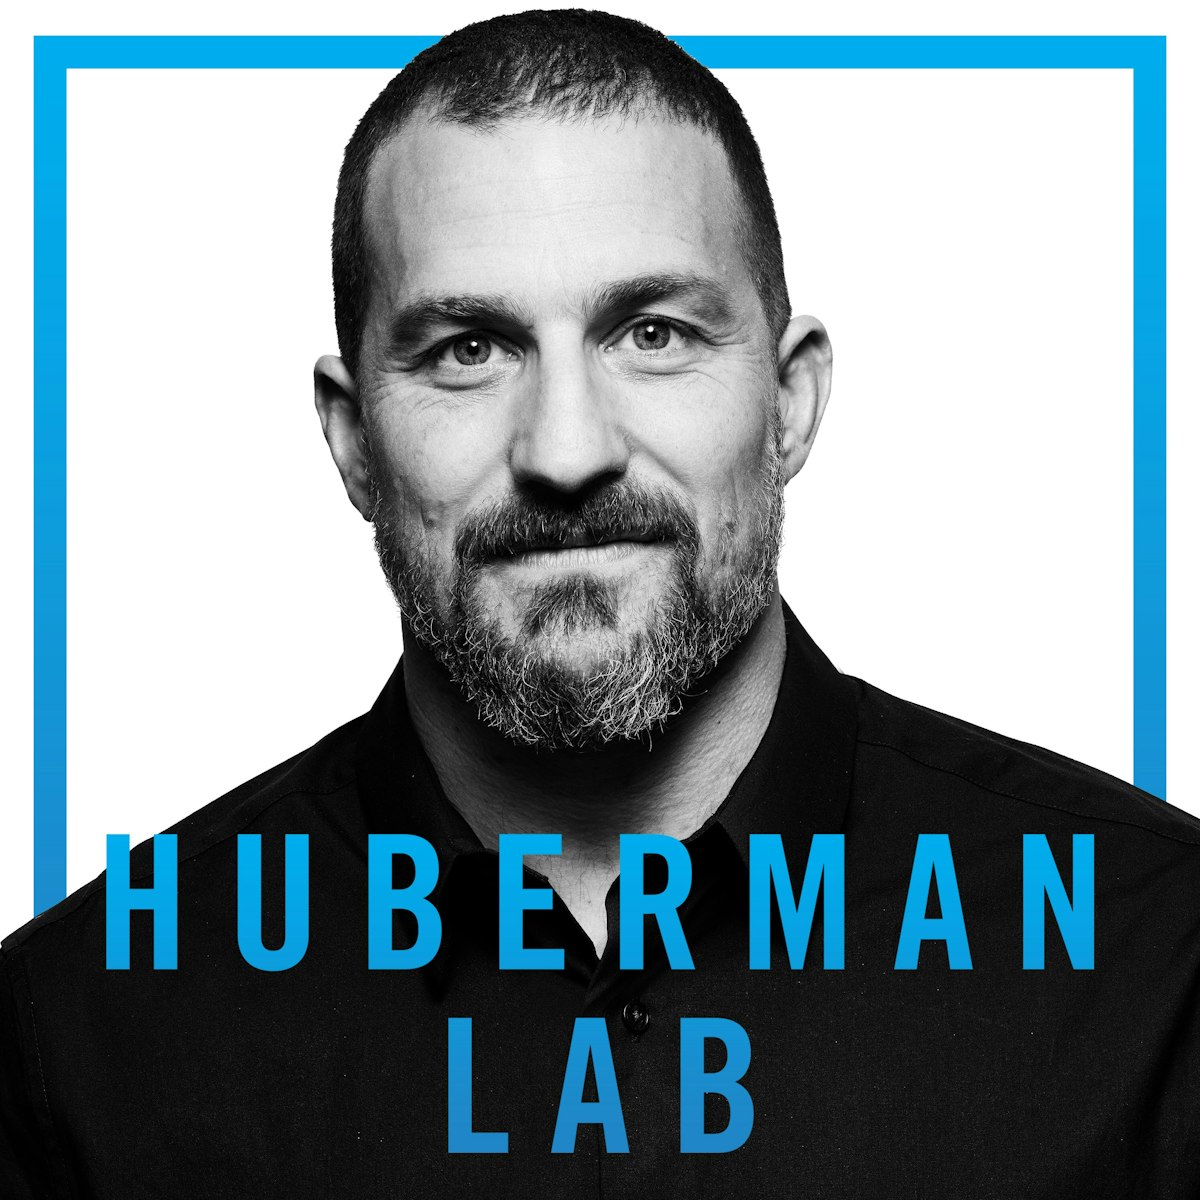 Huberman Lab, Listen here